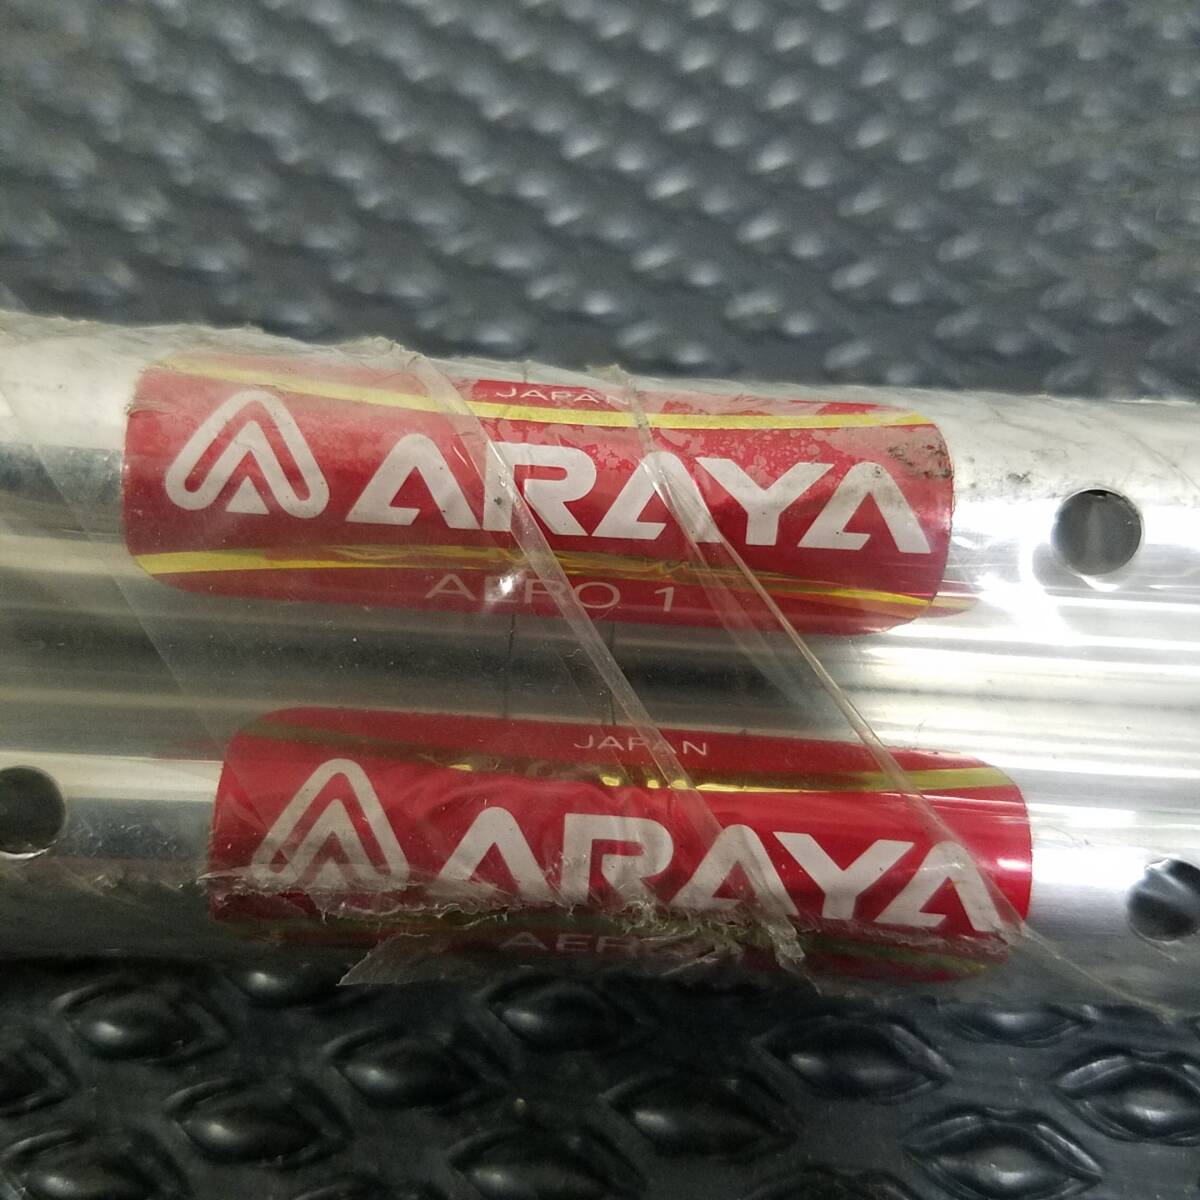 ARAYA AERO1 WORLD CHAMPION 32H 専用ニップル付き チューブラーリム 当時物 2本セット 700C TUBULAR RIMS 未使用品の画像2